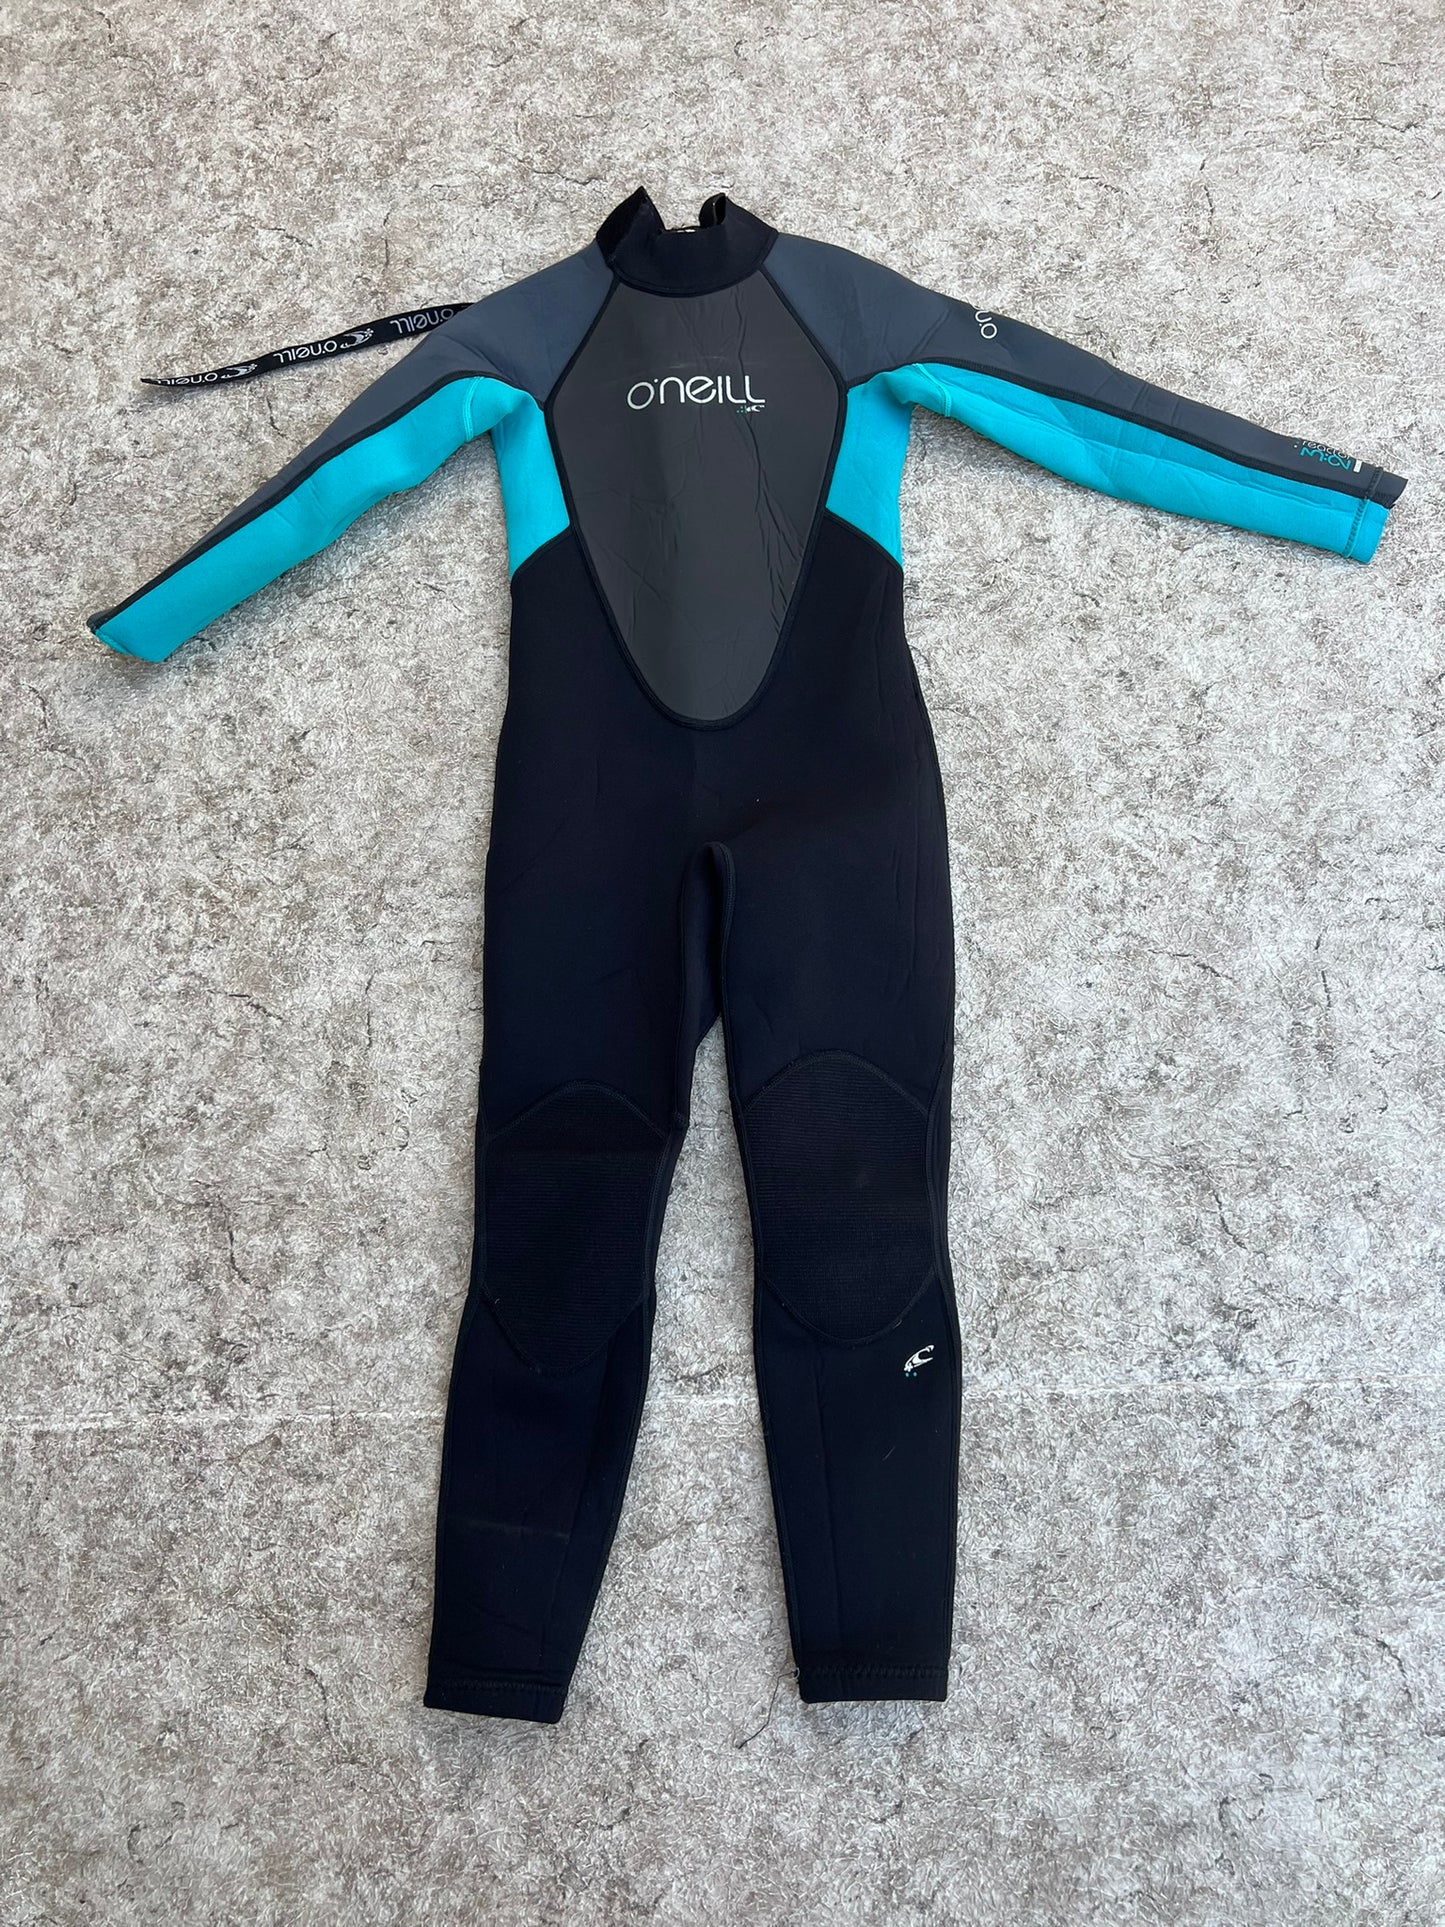 Wetsuit Child Size 6 Teal Blue Black O'Neill Full 3-2 mm Neoprene  Outstanding Quality Like New